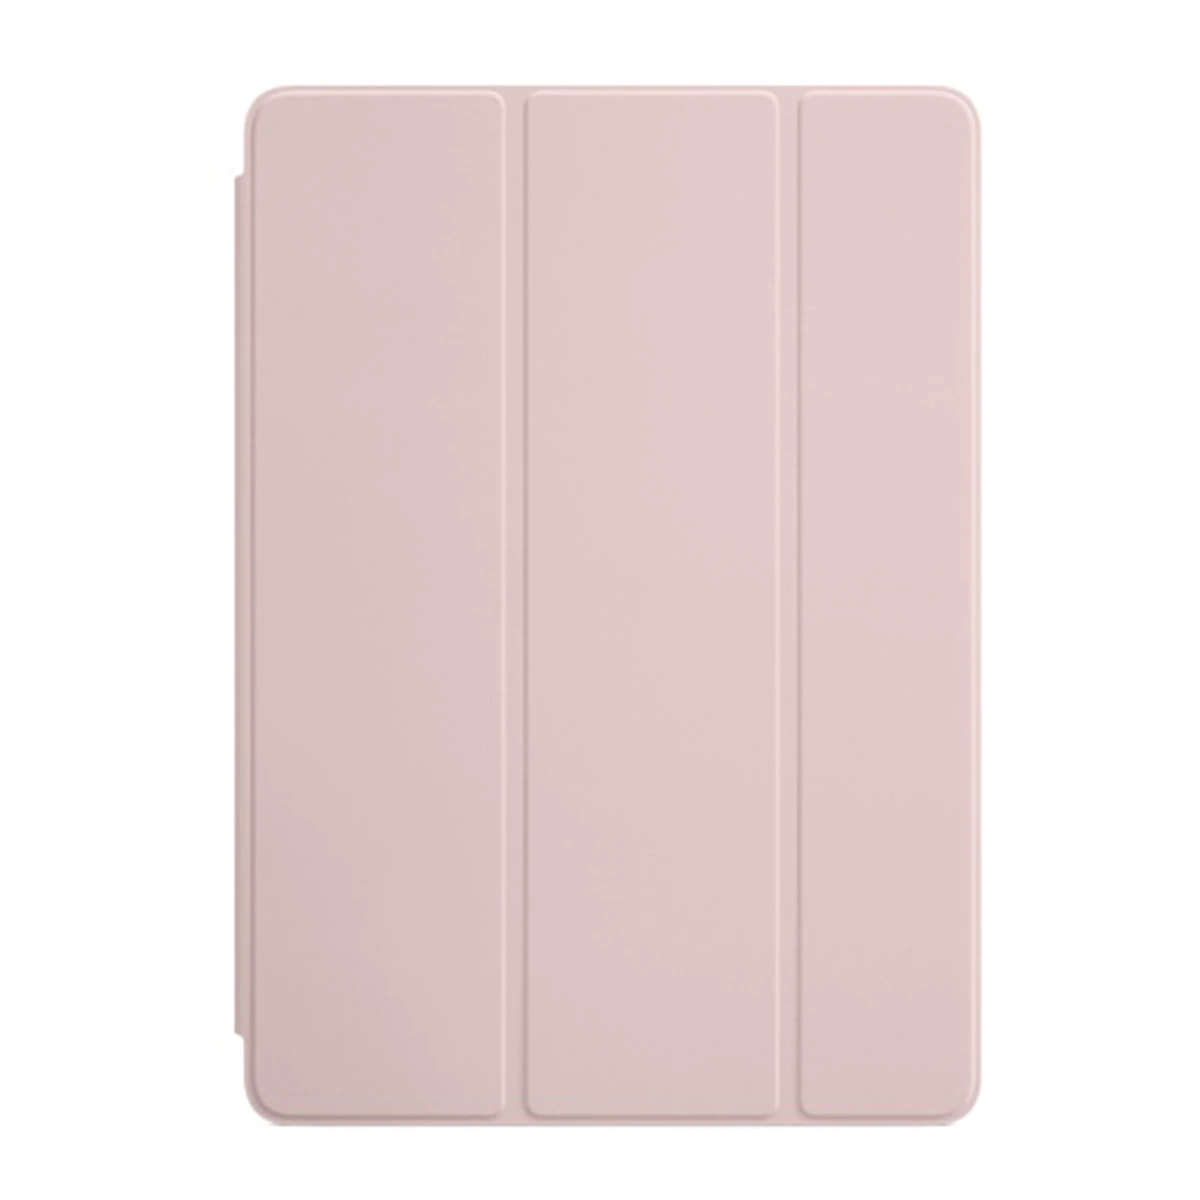 Funda Apple Smart Cover para iPad y iPad Air 2 rosa arena